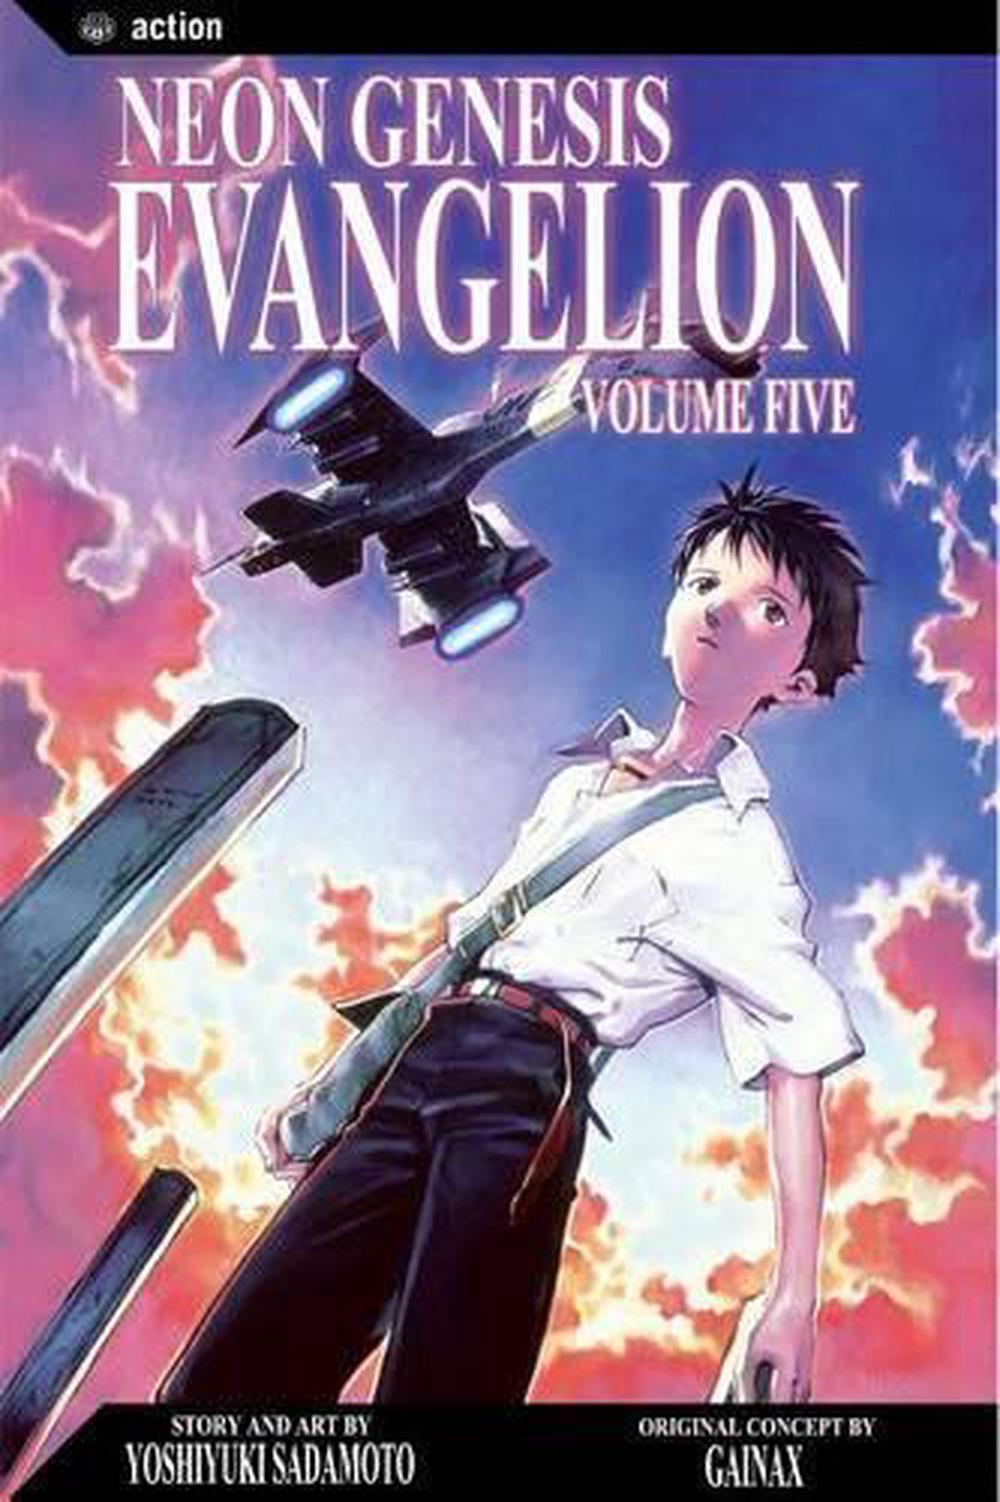 Neon Genesis Evangelion Volume 5 By Yoshiyuki Sadamoto English 0737